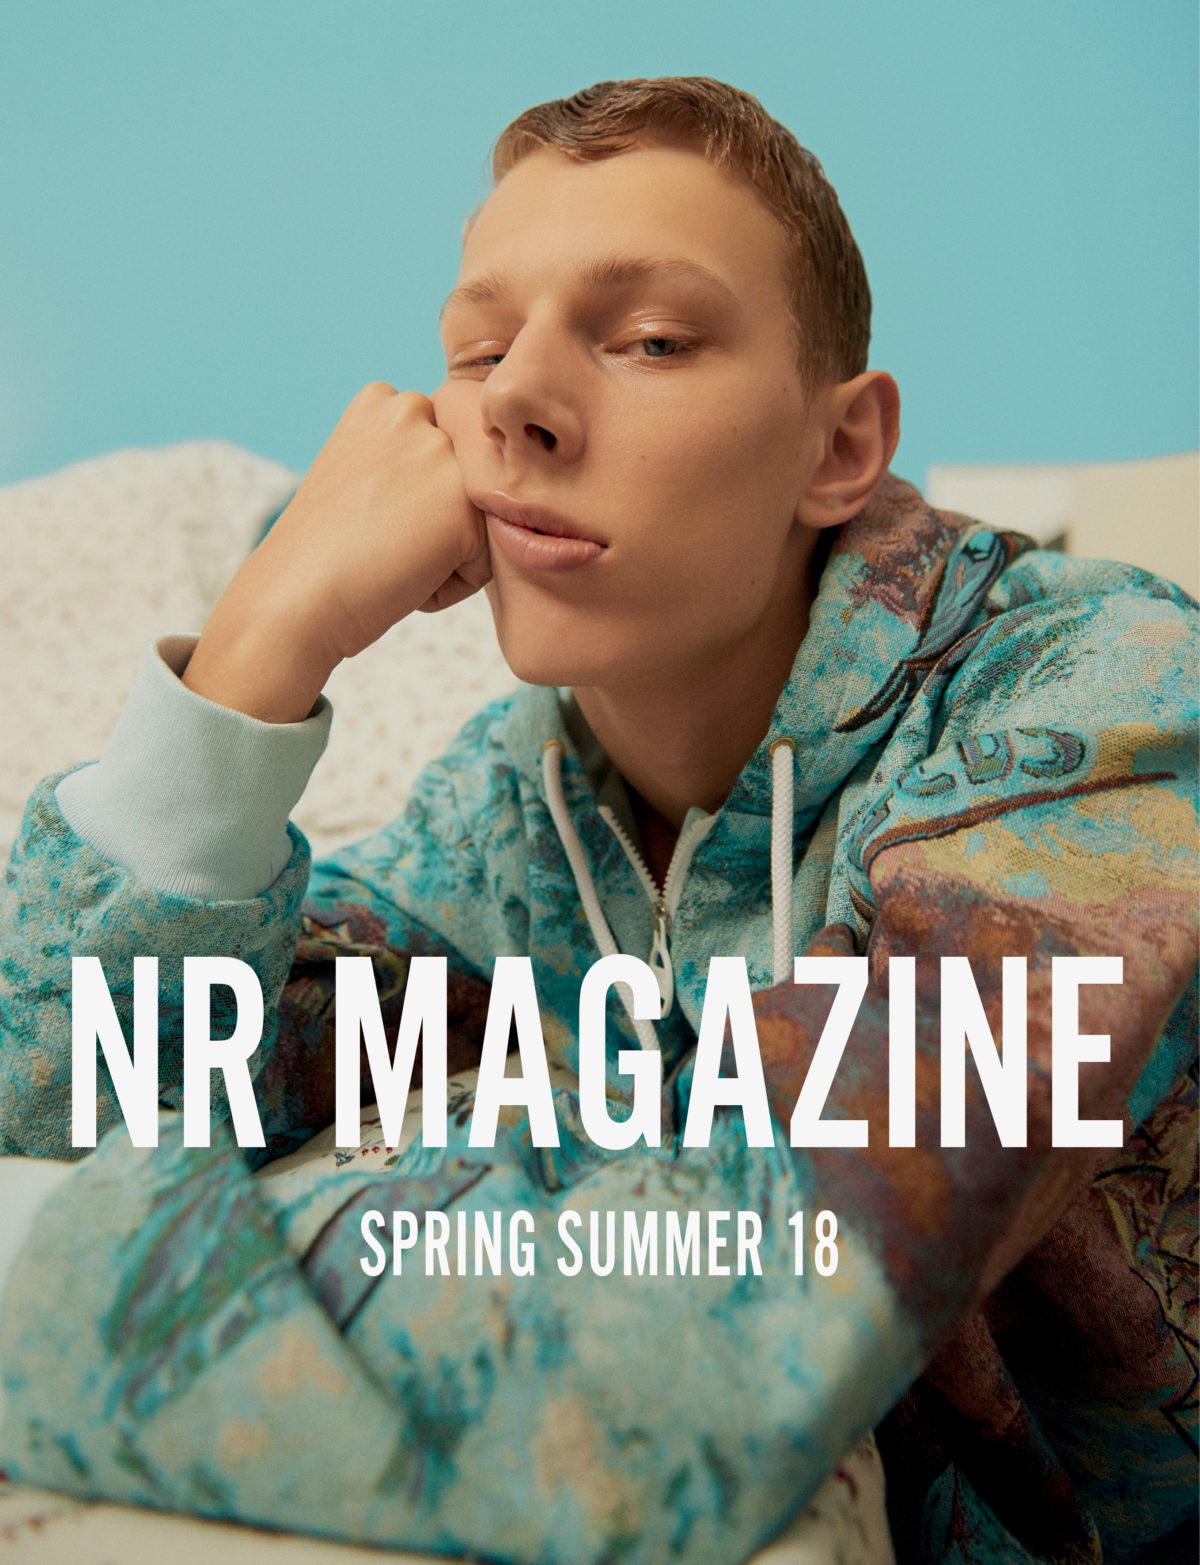 NR Magazine shot by Niklas Bergstrand & Mateja Duljak styled by Arthur Mayadoux with GCDS